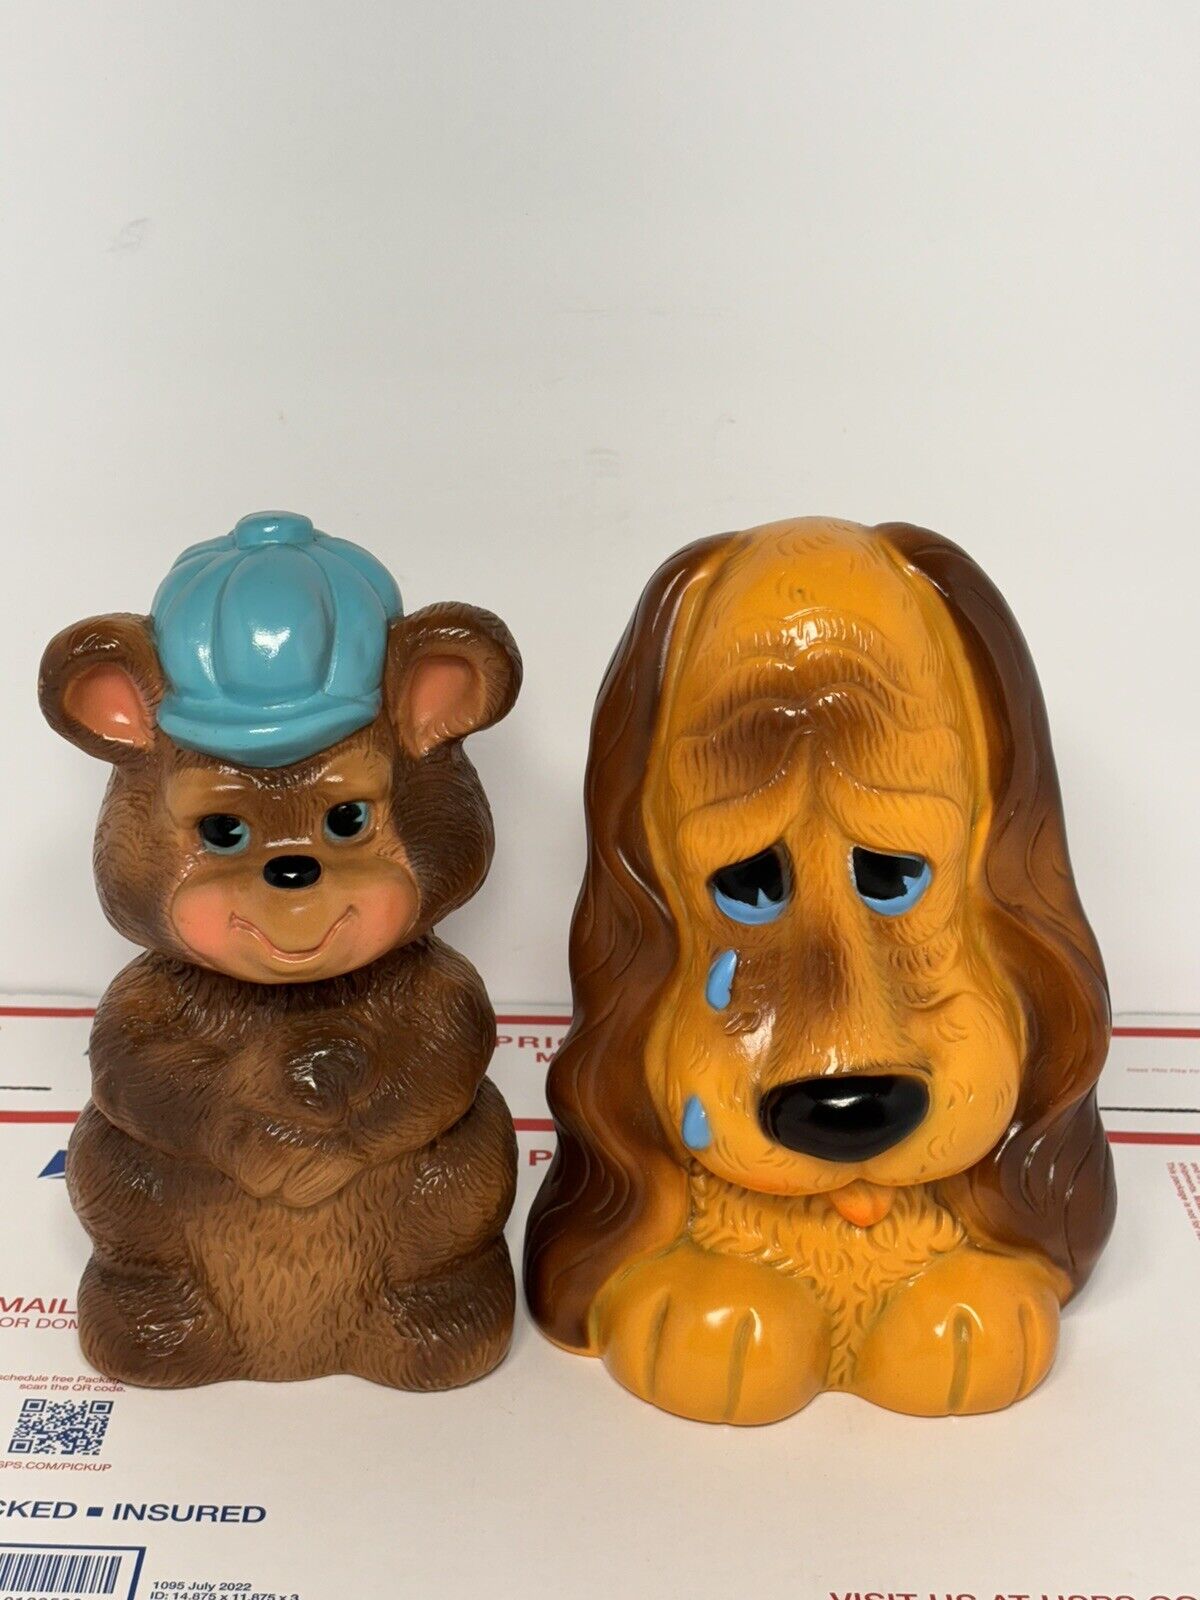 1973 Russ Berrie & Co Plastic Teddy Bear + Crying Cocker Spaniel Dog Peggy Bank